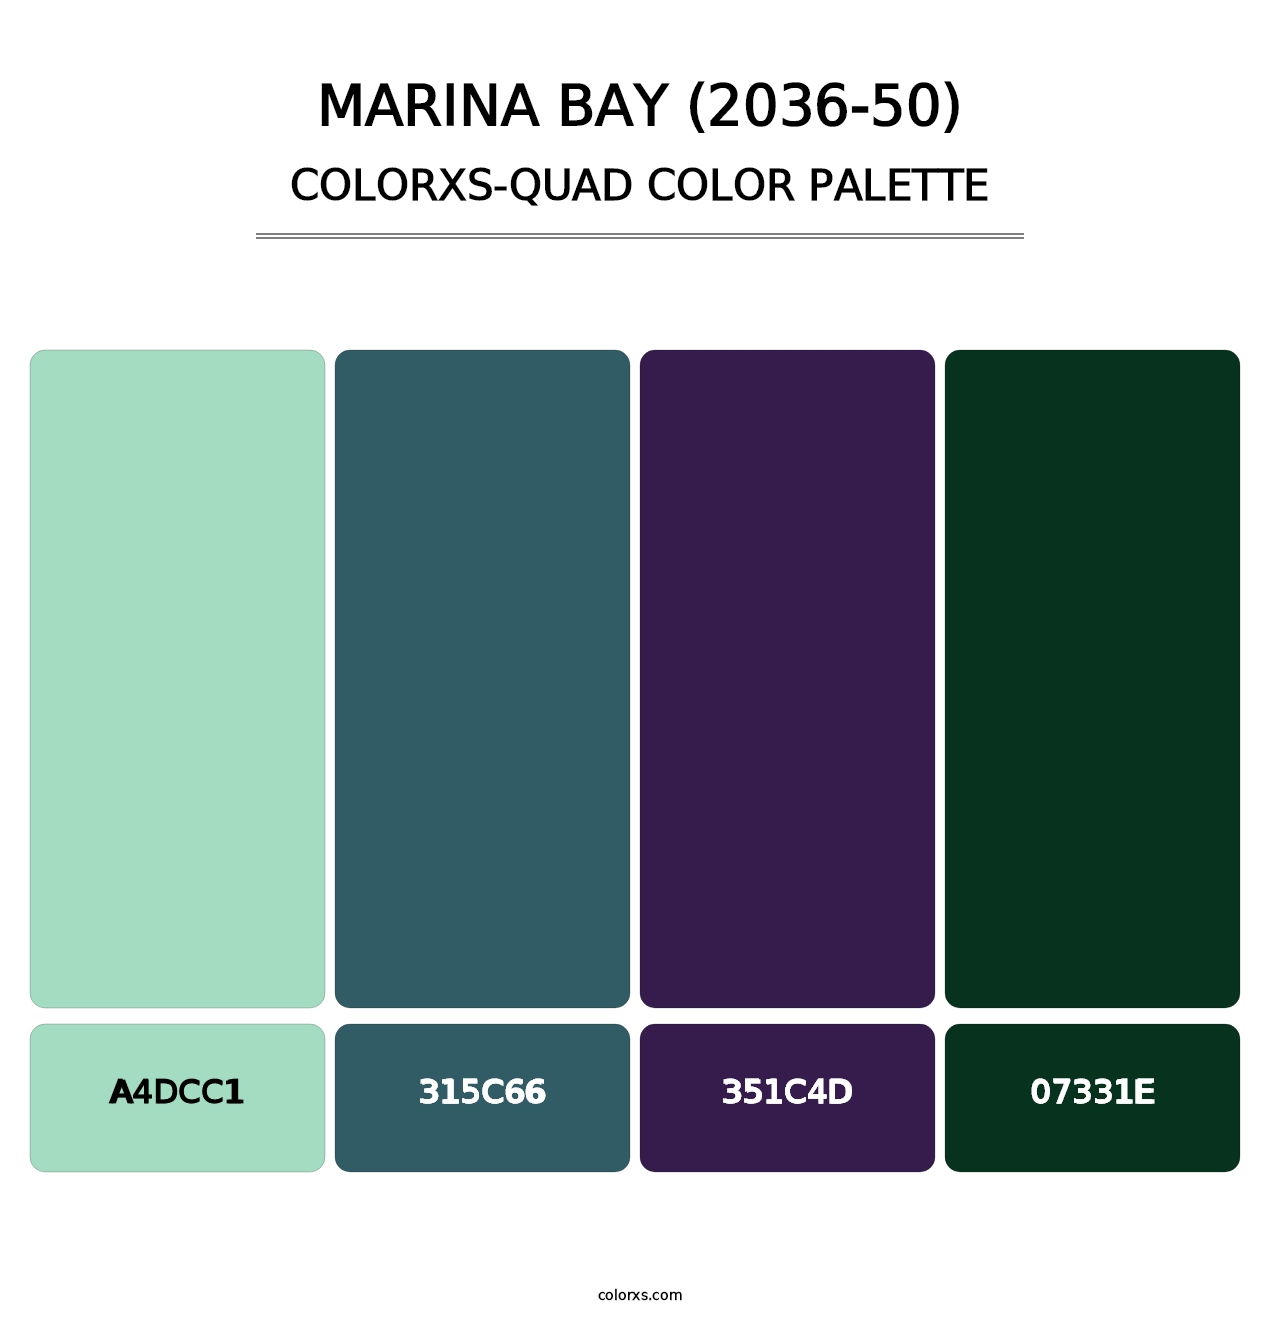 Marina Bay (2036-50) - Colorxs Quad Palette